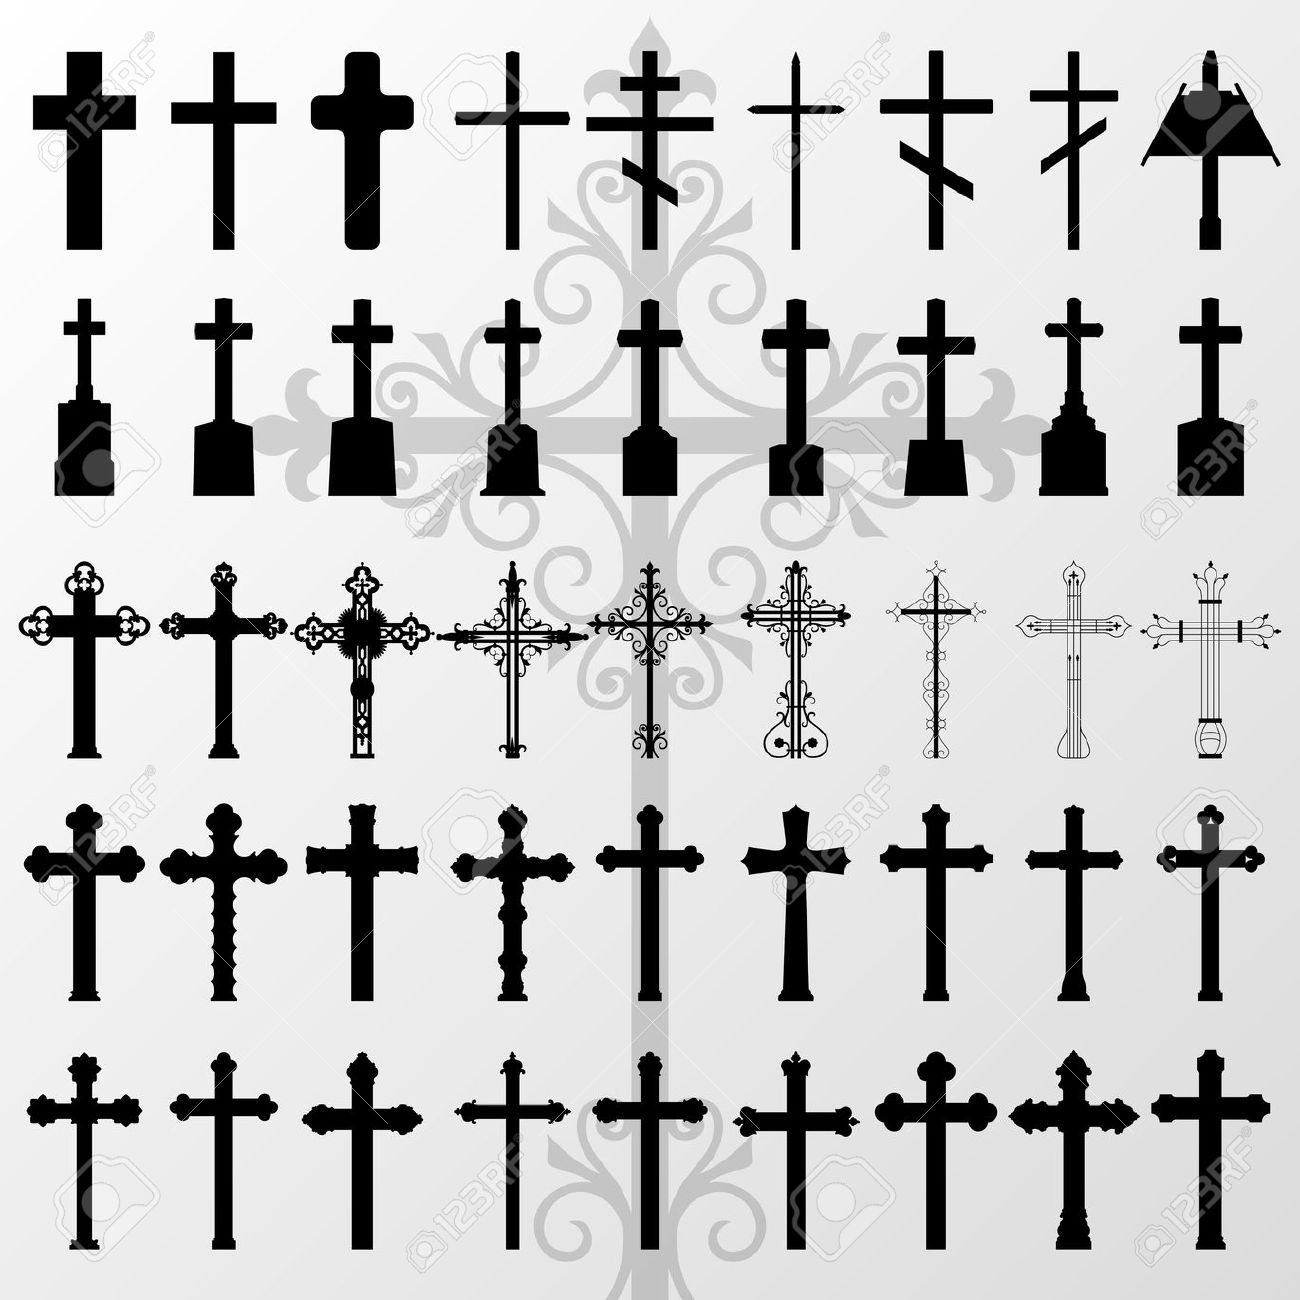 Graveyard cross silhouette clipart 